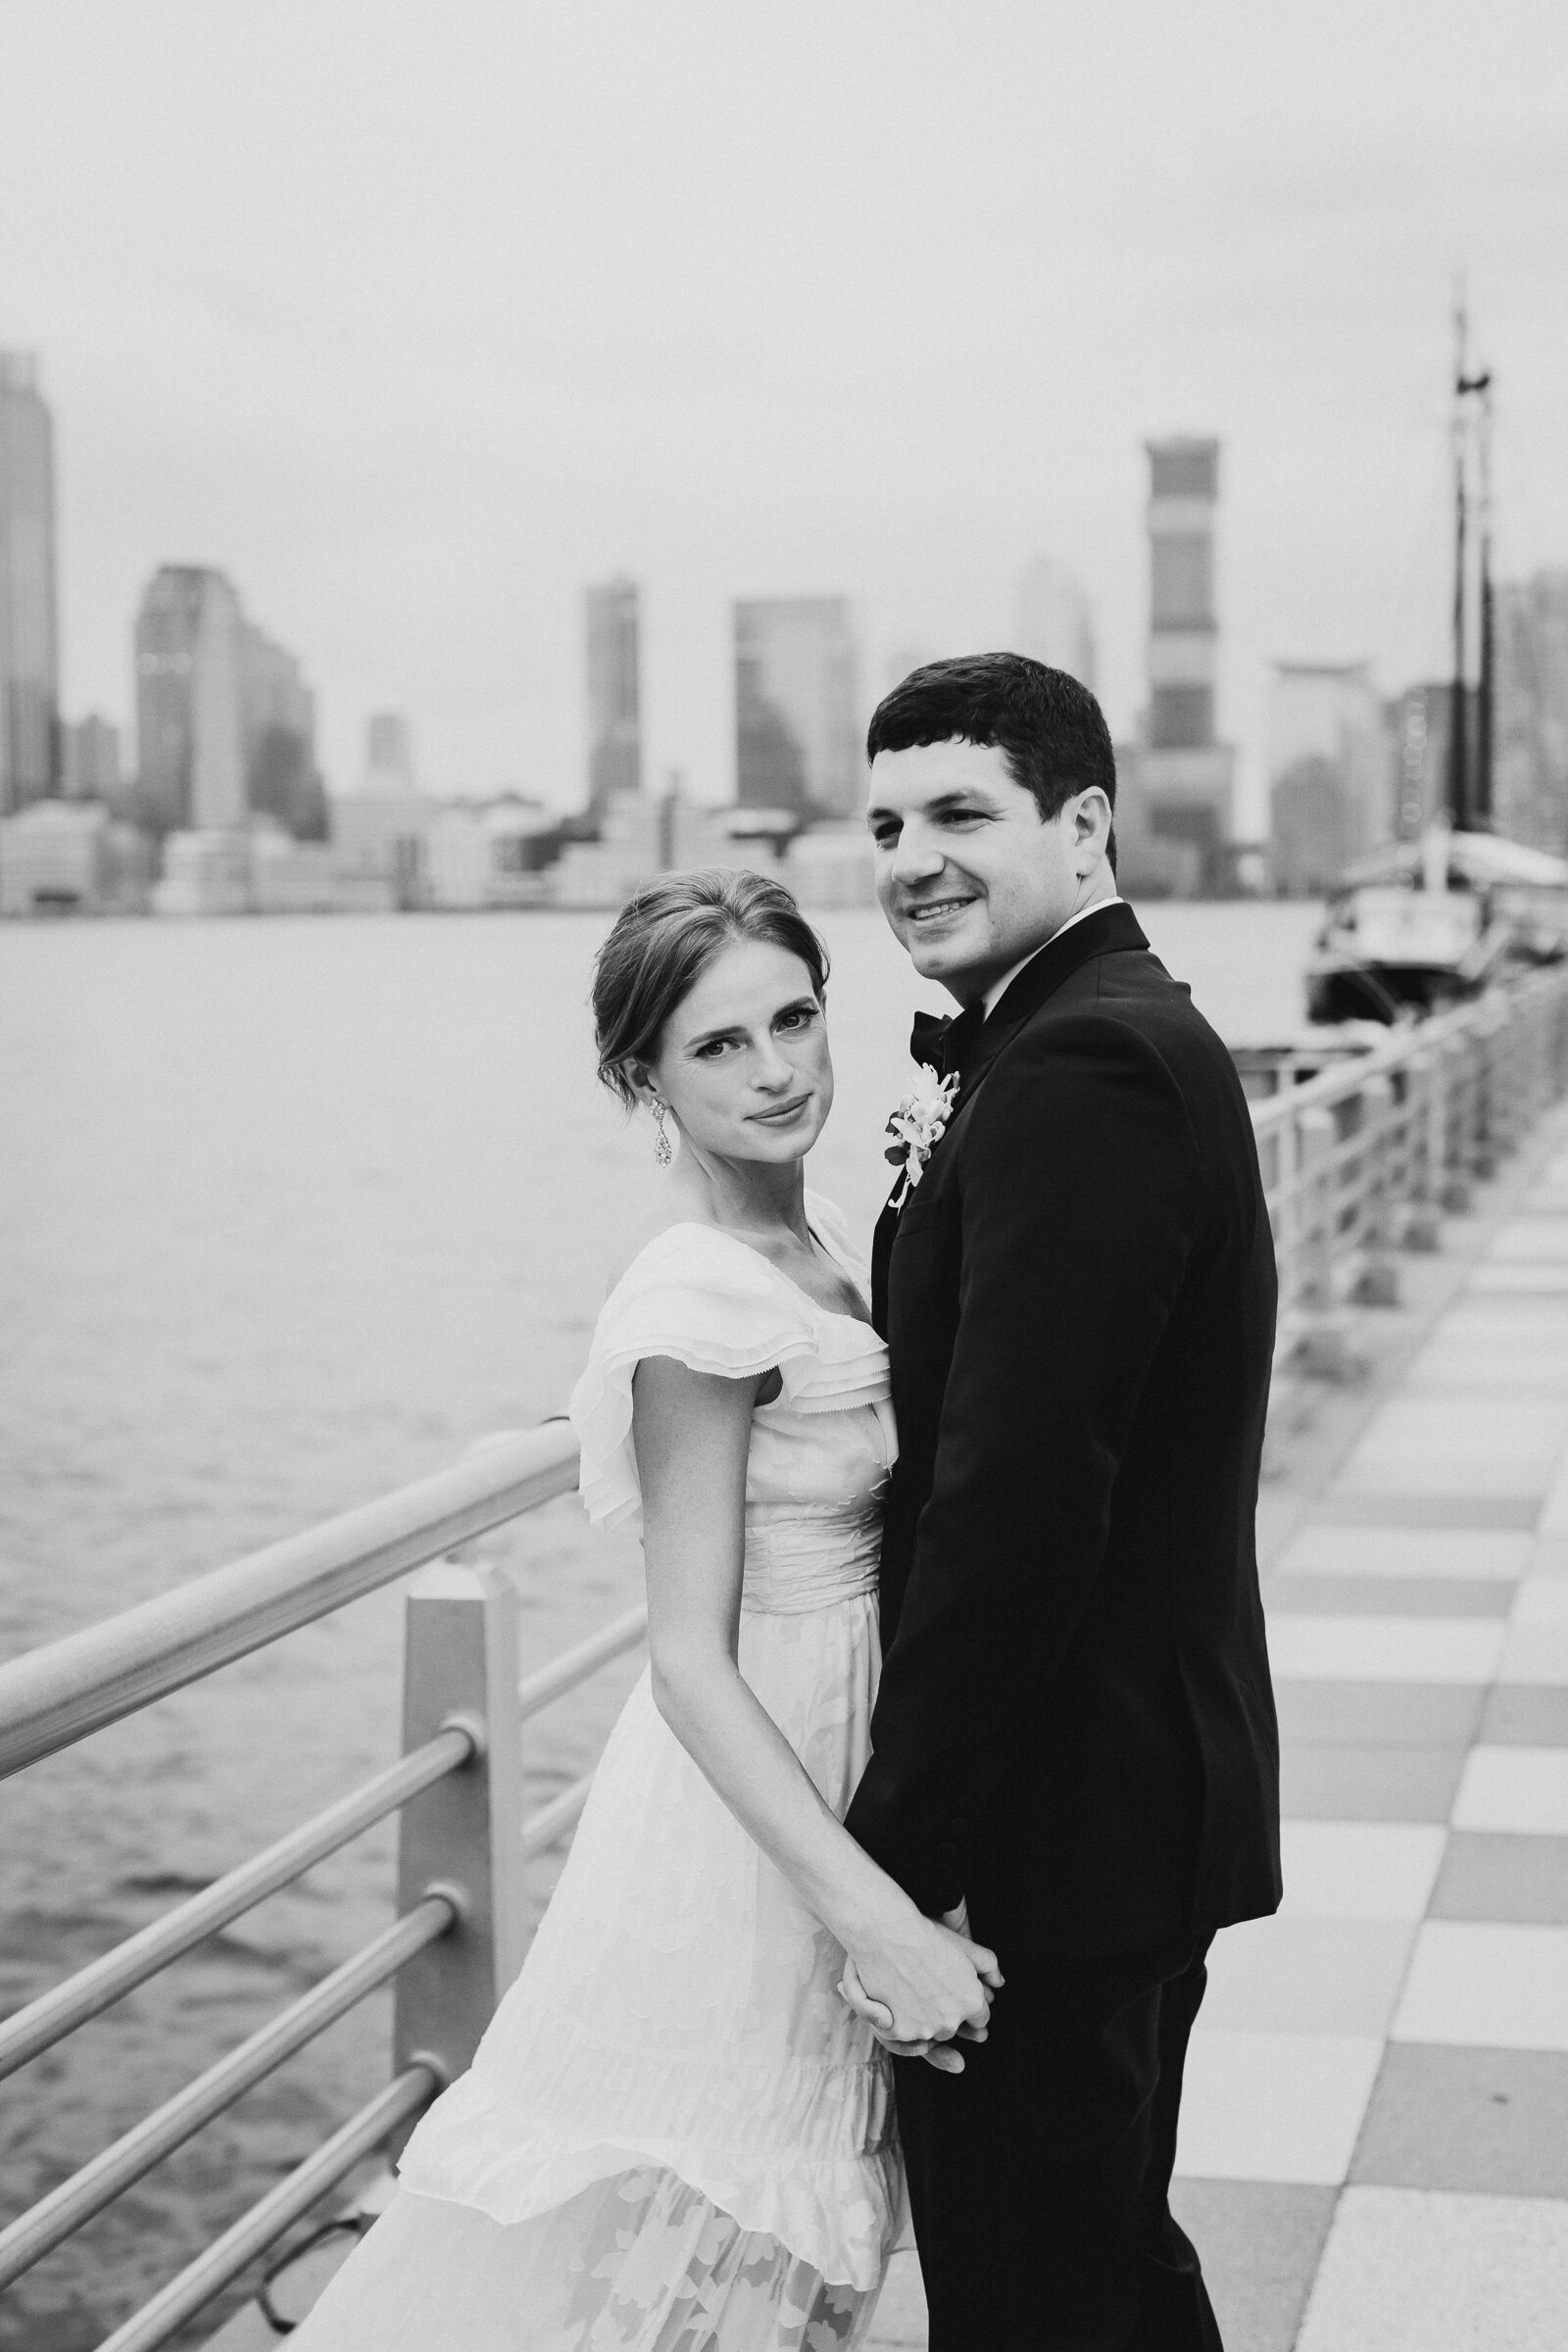 Best-Of-NYC-Brooklyn-2020-Wedding-Photography-Elvira-Kalviste-19.jpg